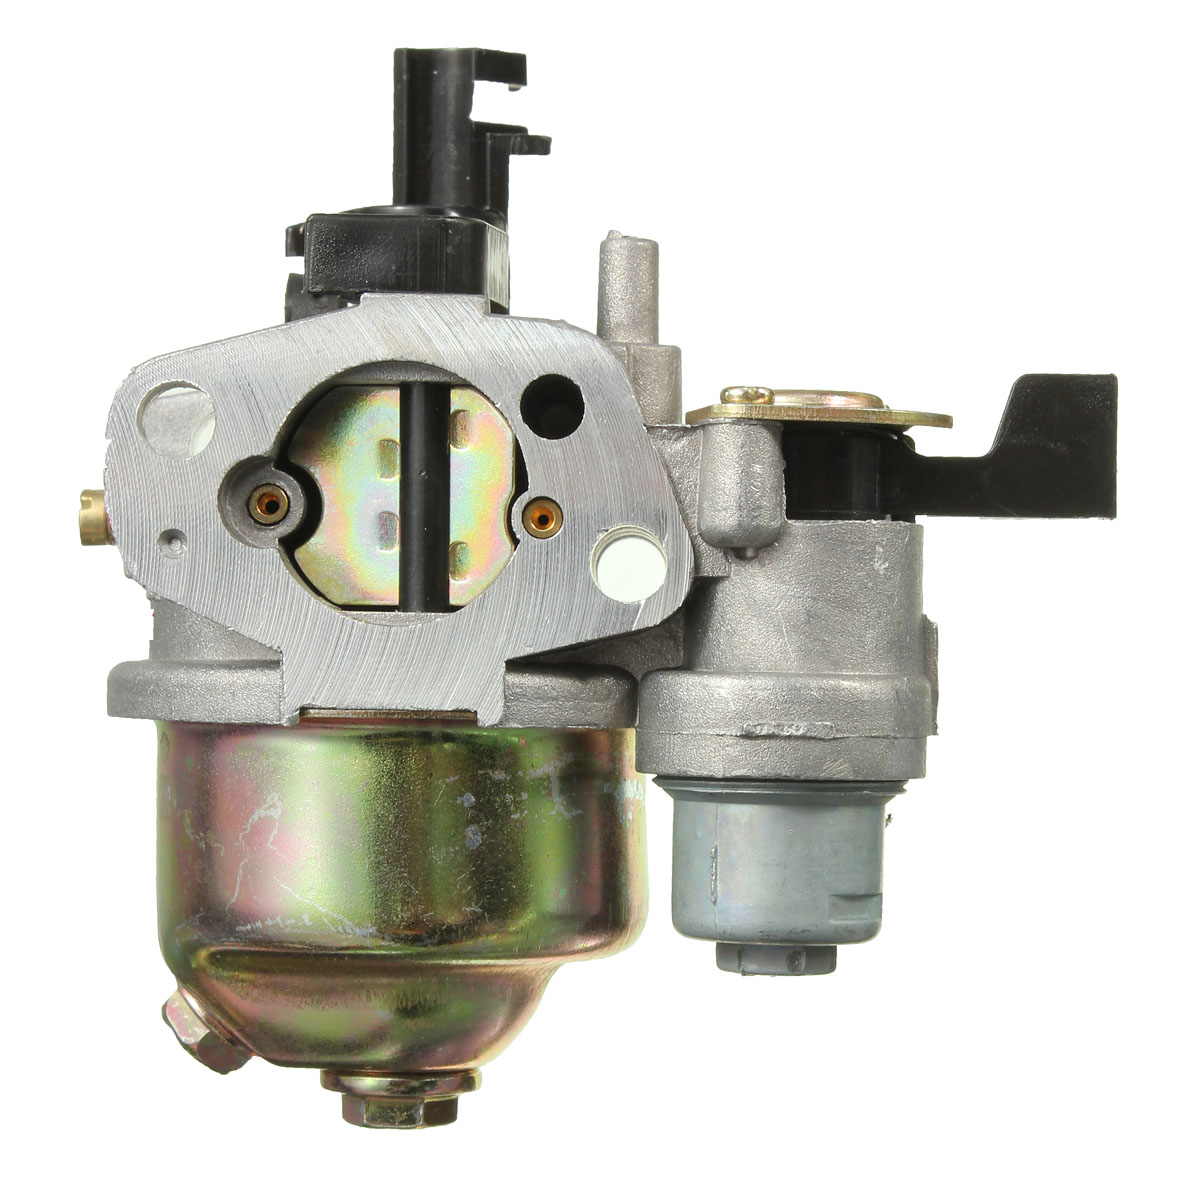 Recoil Carburetor Carb Starter Ignition Coil Spark Plug Air Filter Gas Cap For Honda GX160 5.5HP Engine Kit